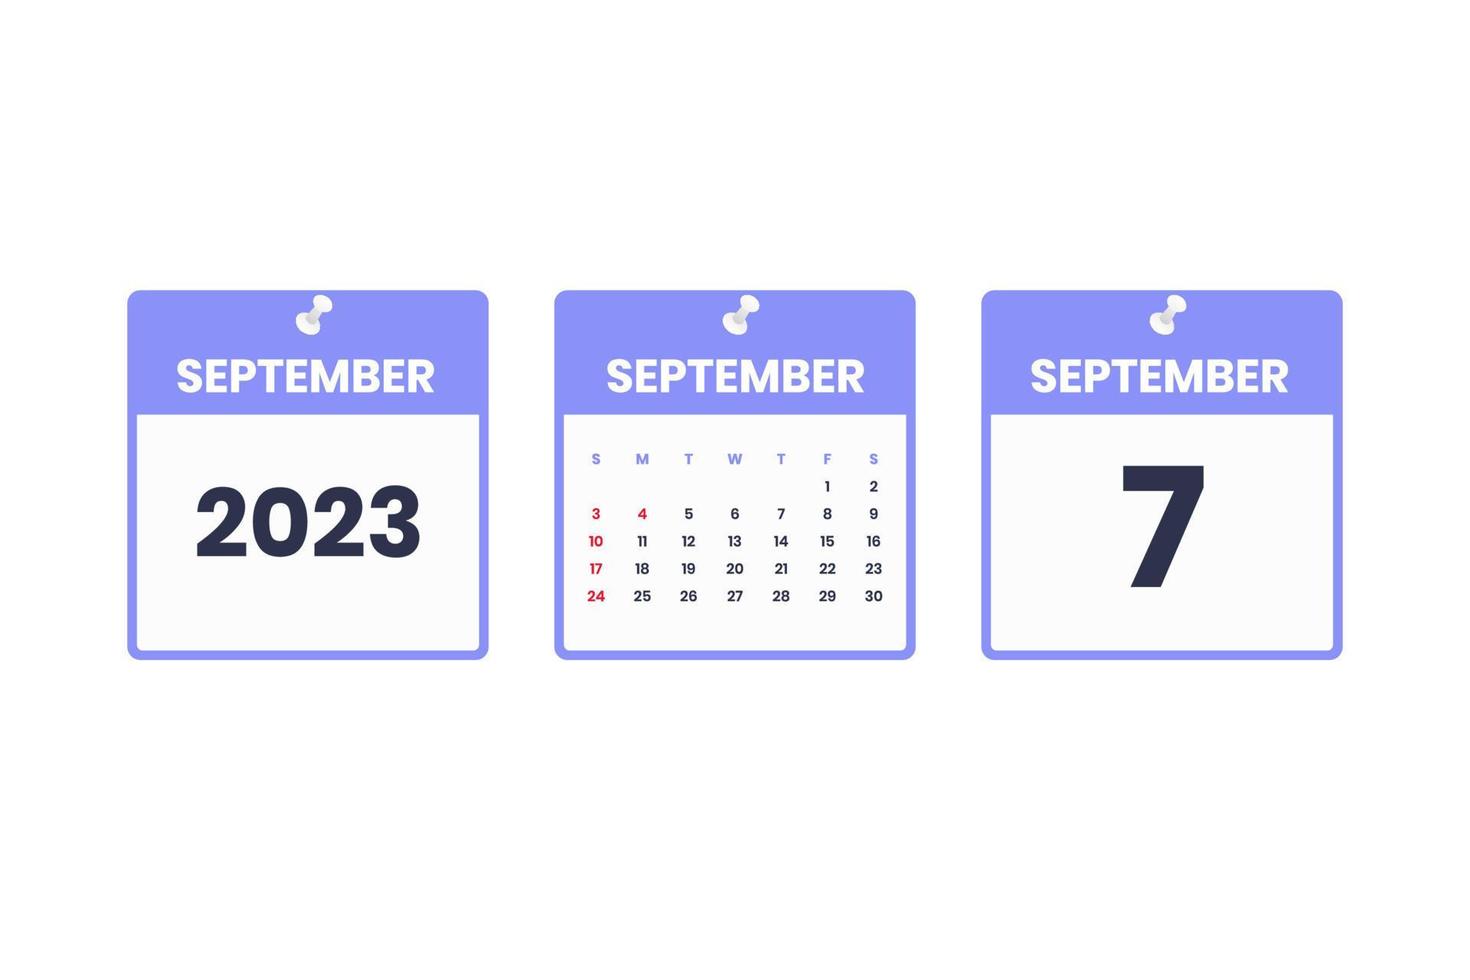 September calendar design. September 7 2023 calendar icon for schedule, appointment, important date concept vector